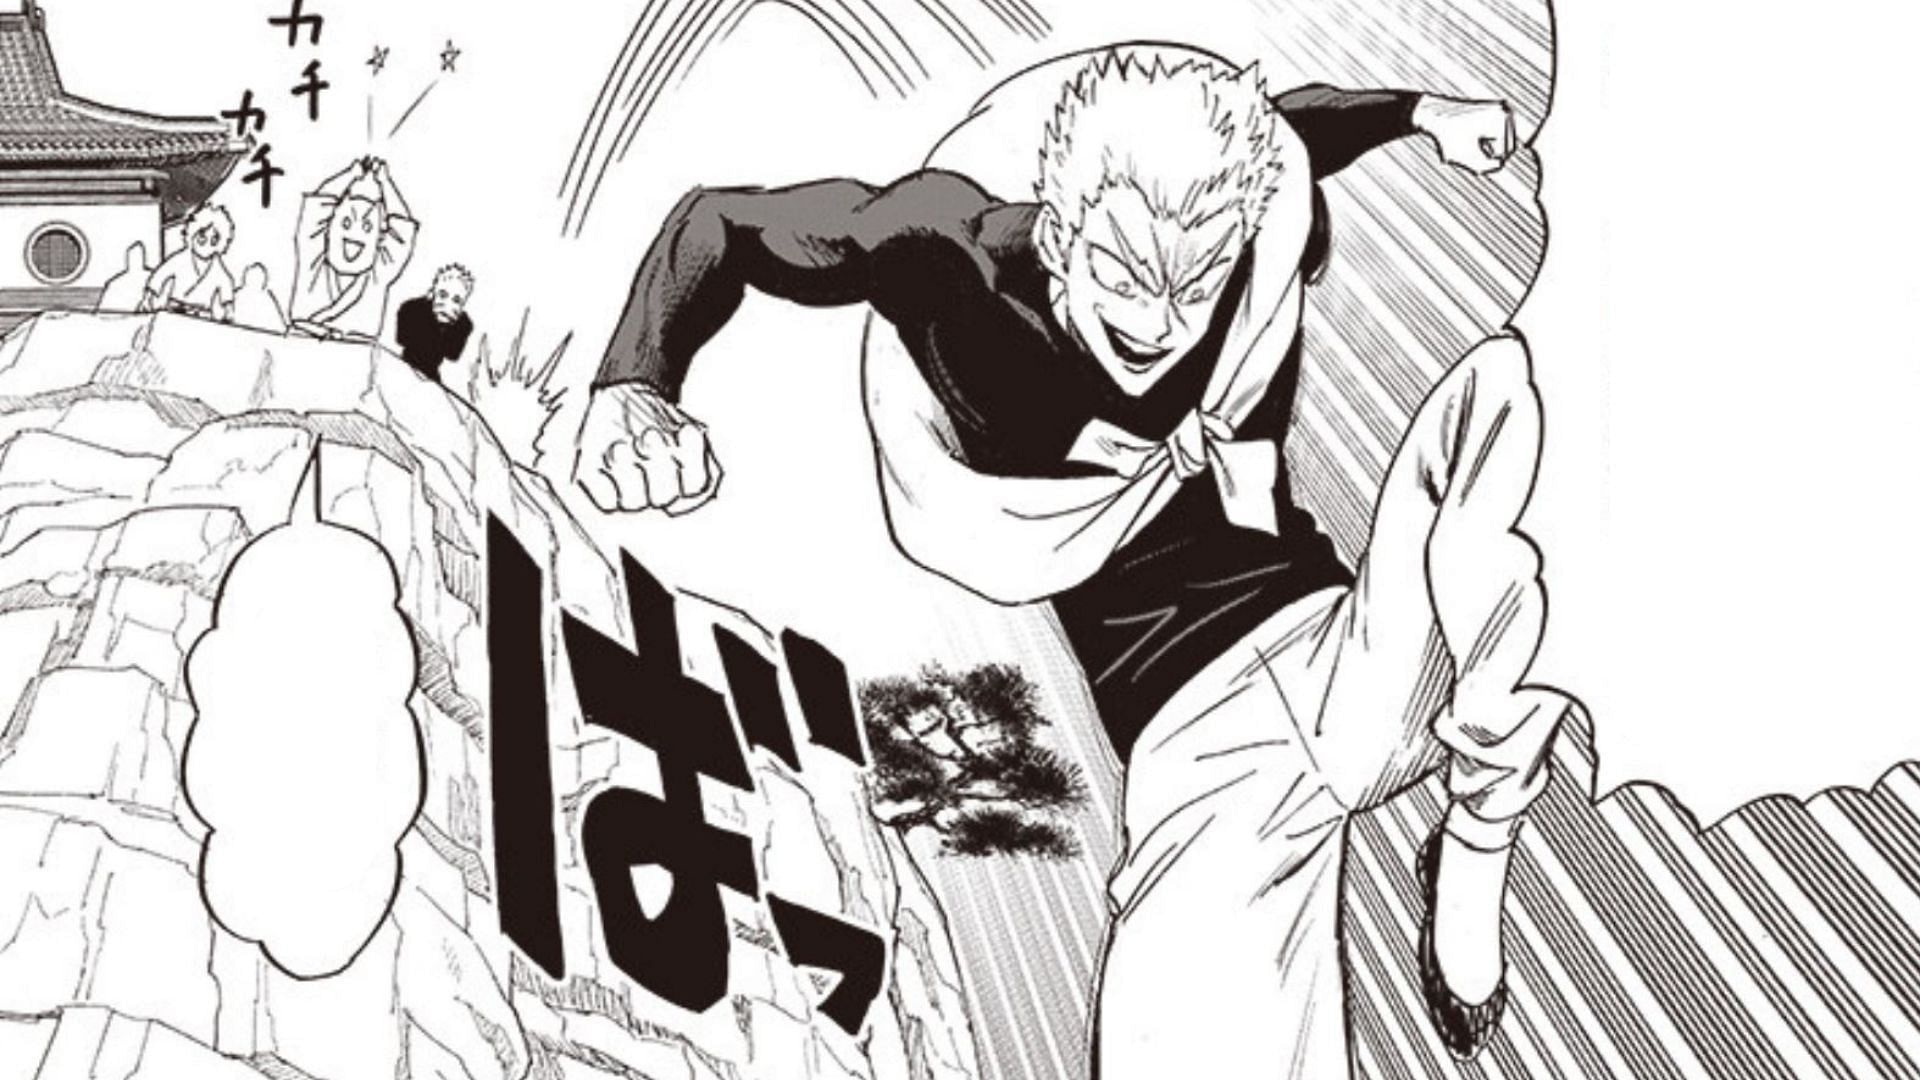 Garou in One Punch Man chapter 191 (Image via Shueisha)